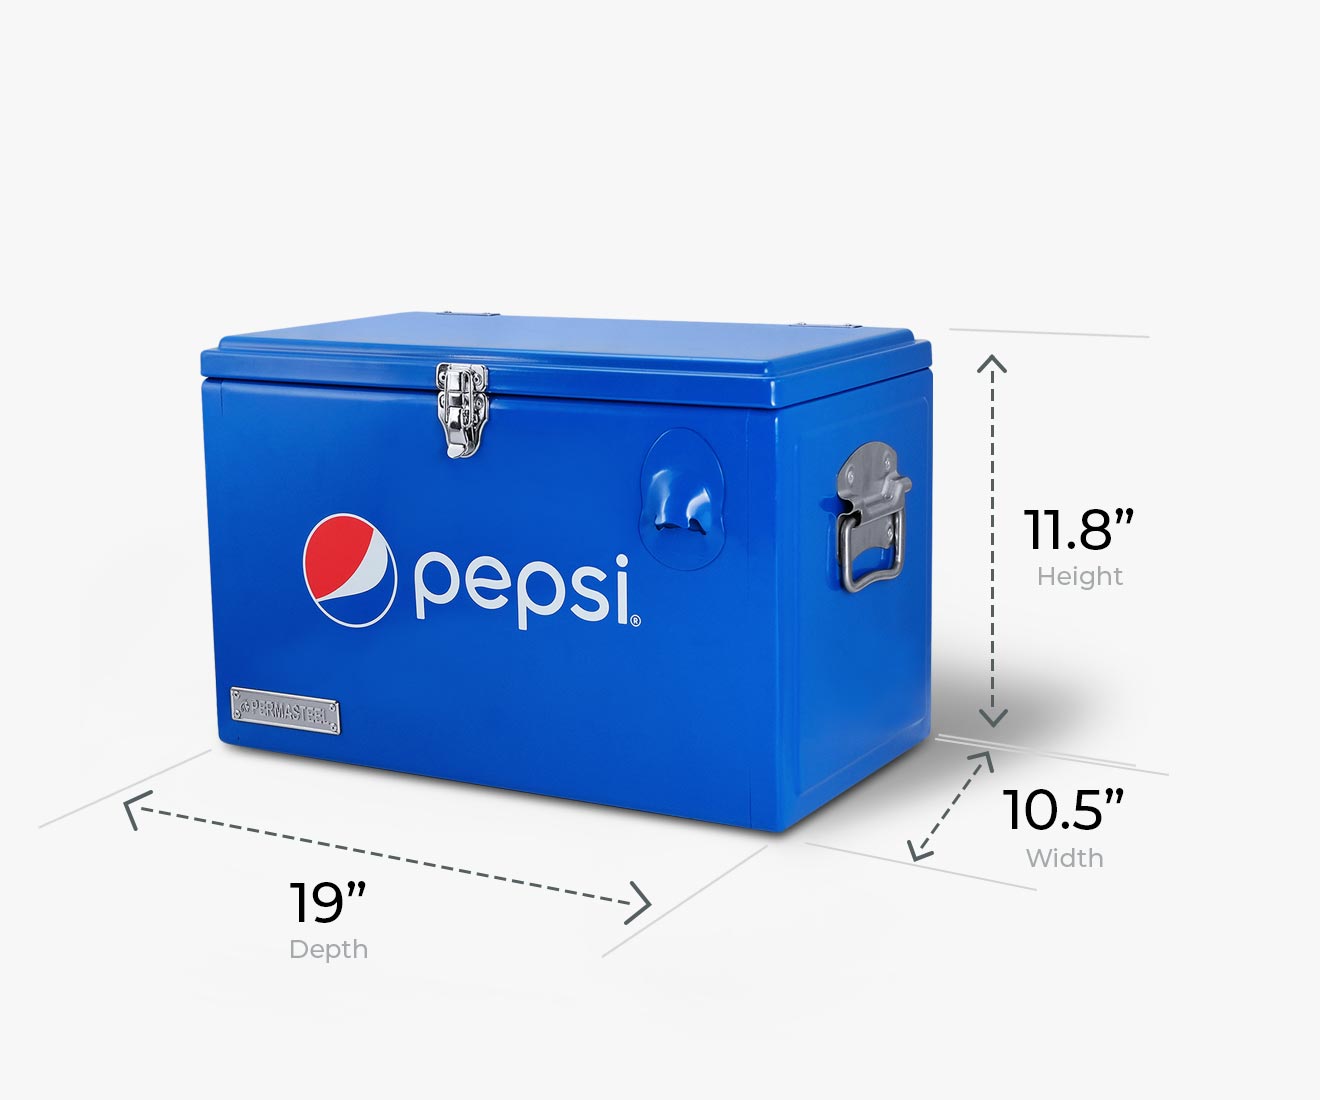 Permasteel Pepsi 21-Quart Portable Small Cooler Personal Ice Chest Blue Cooler